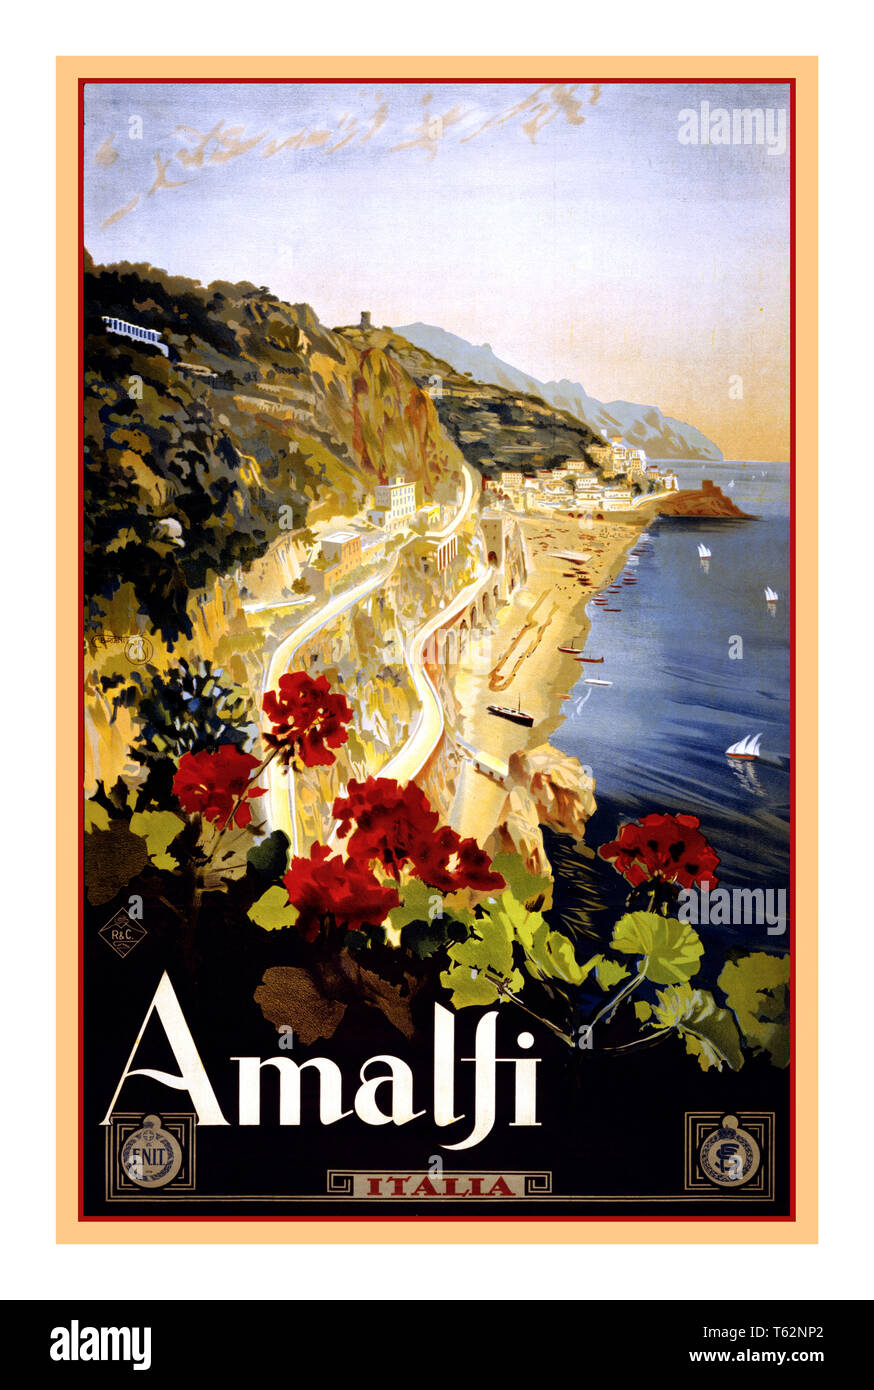 AMALFI Vintage Historic Retro Travel Poster 1900’s Amalfi Italy Travel poster by Mario Borgoni, shows Amalfi coastline with geraniums in foreground. Date 1920 Amalfi Campania Italy Stock Photo